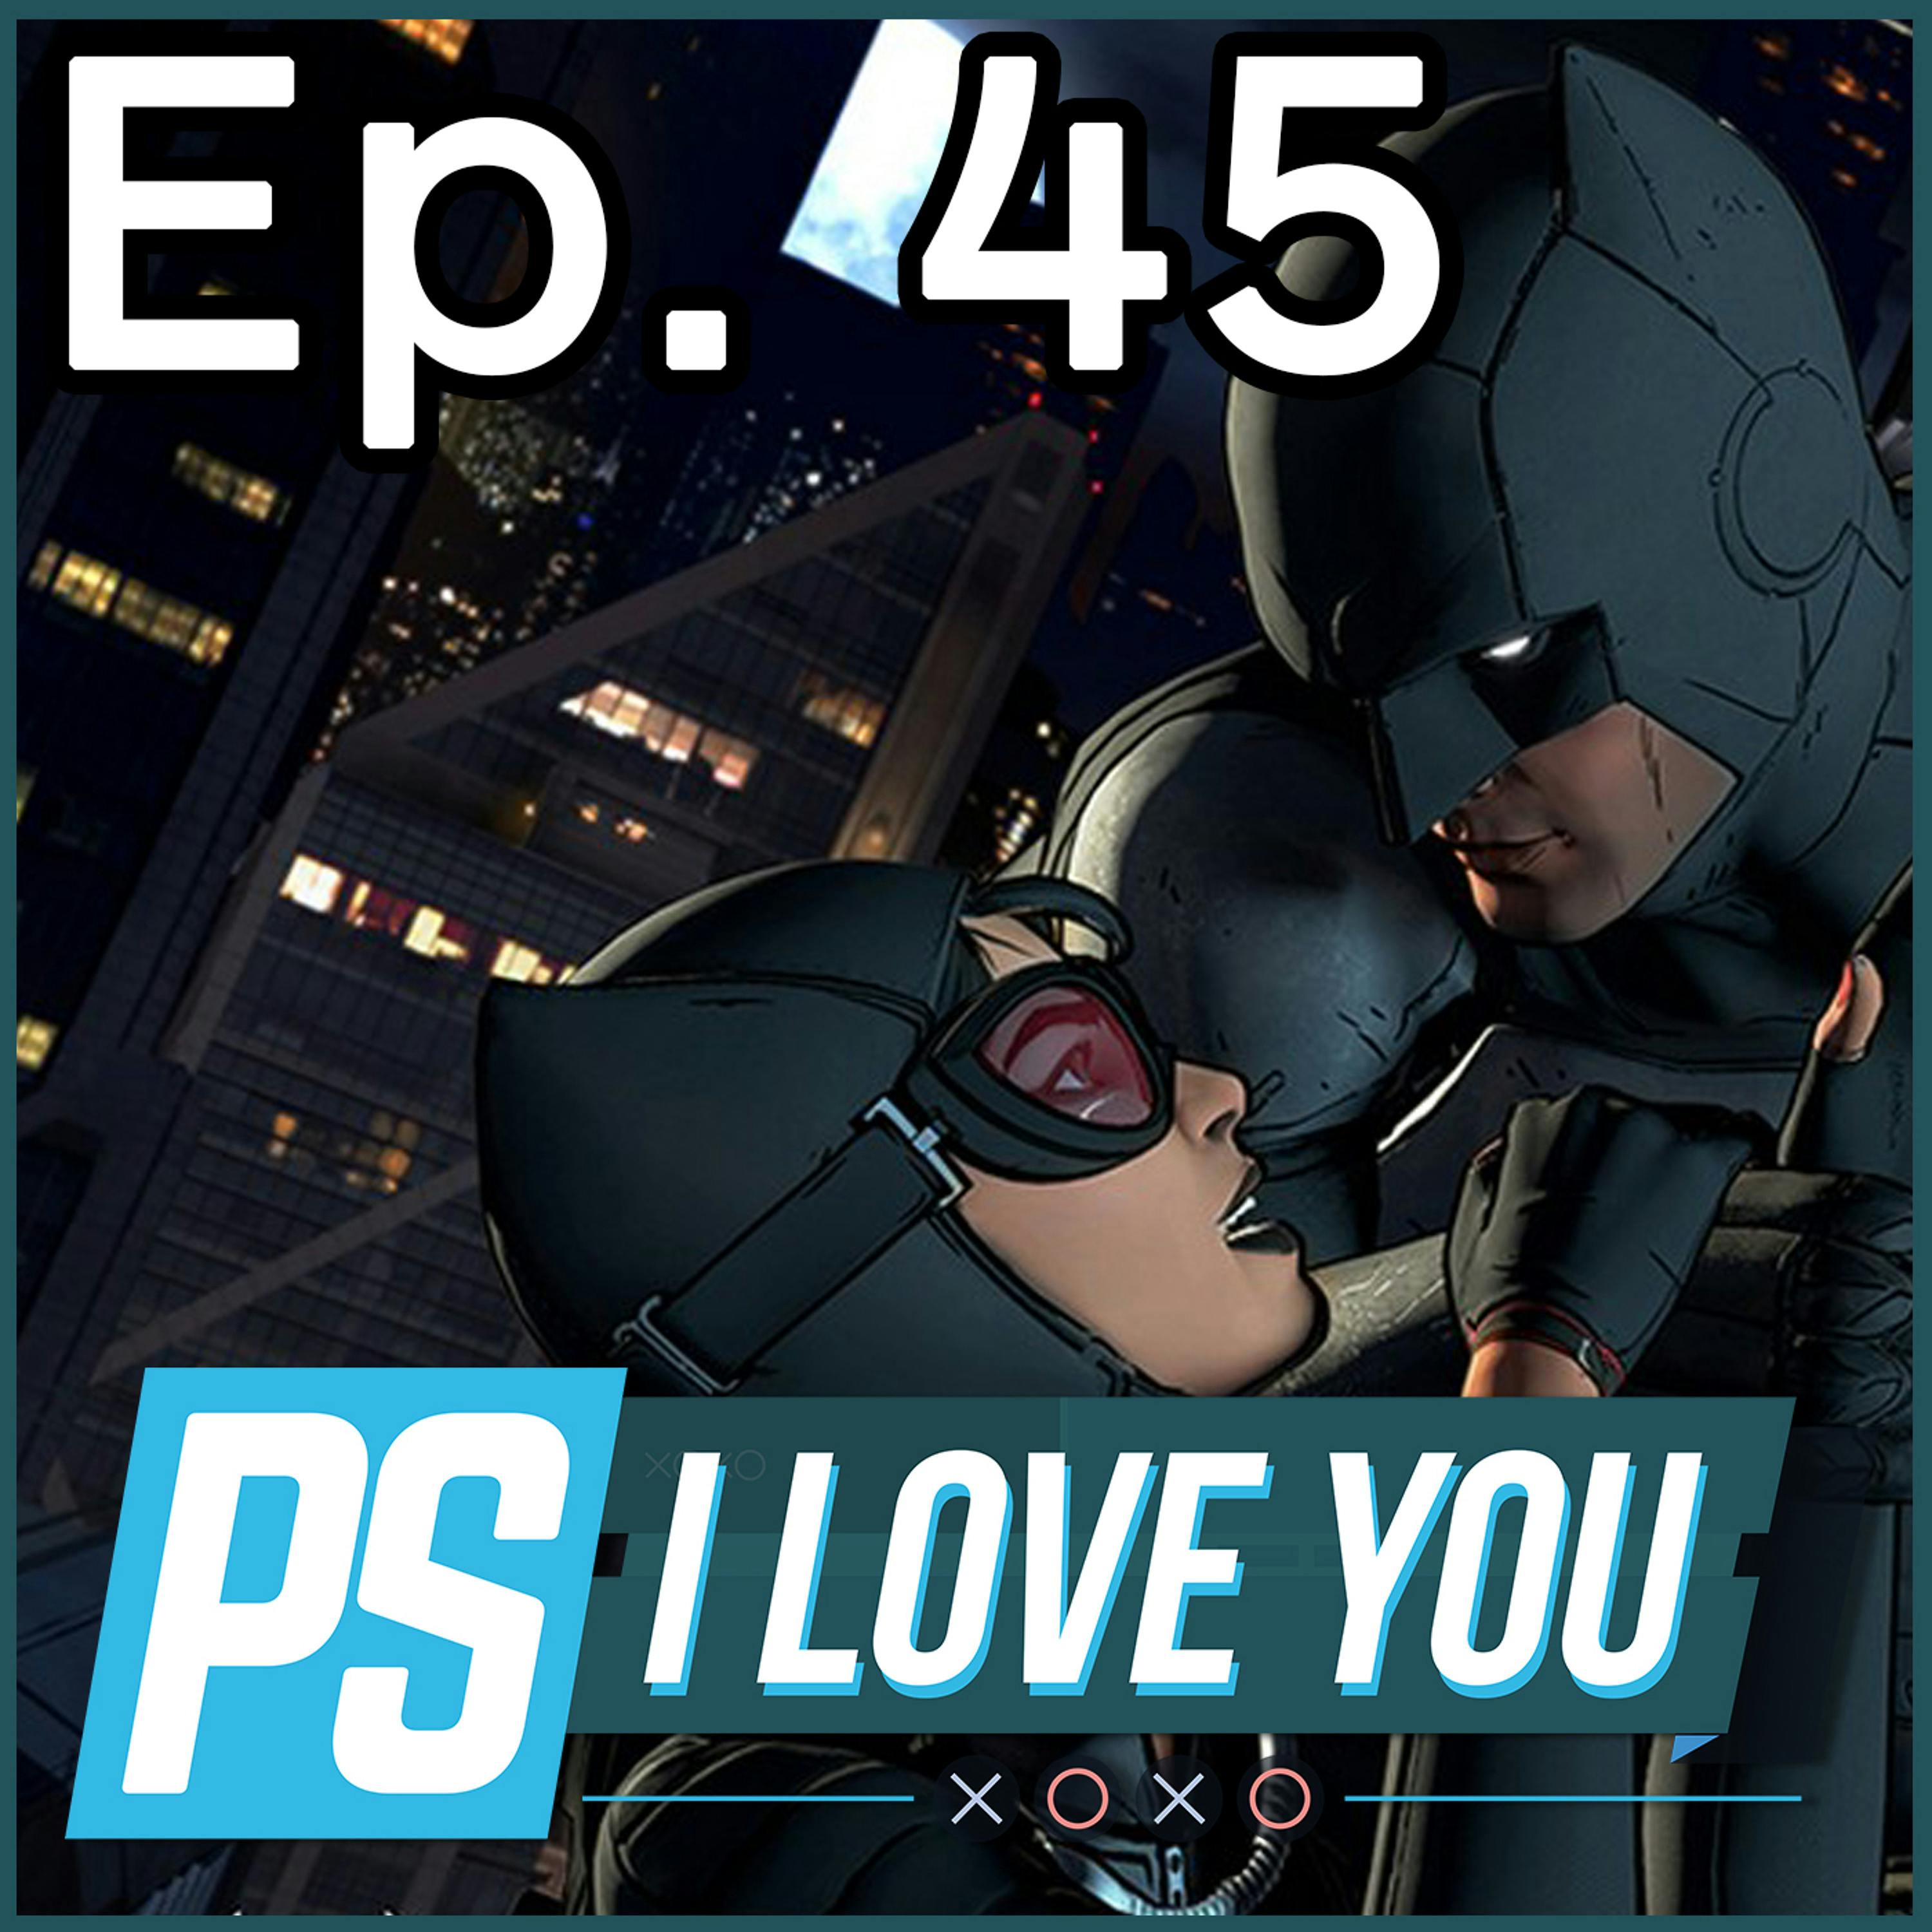 Greg’s Played Batman: The Telltale Series - PS I Love You XOXO Ep. 45